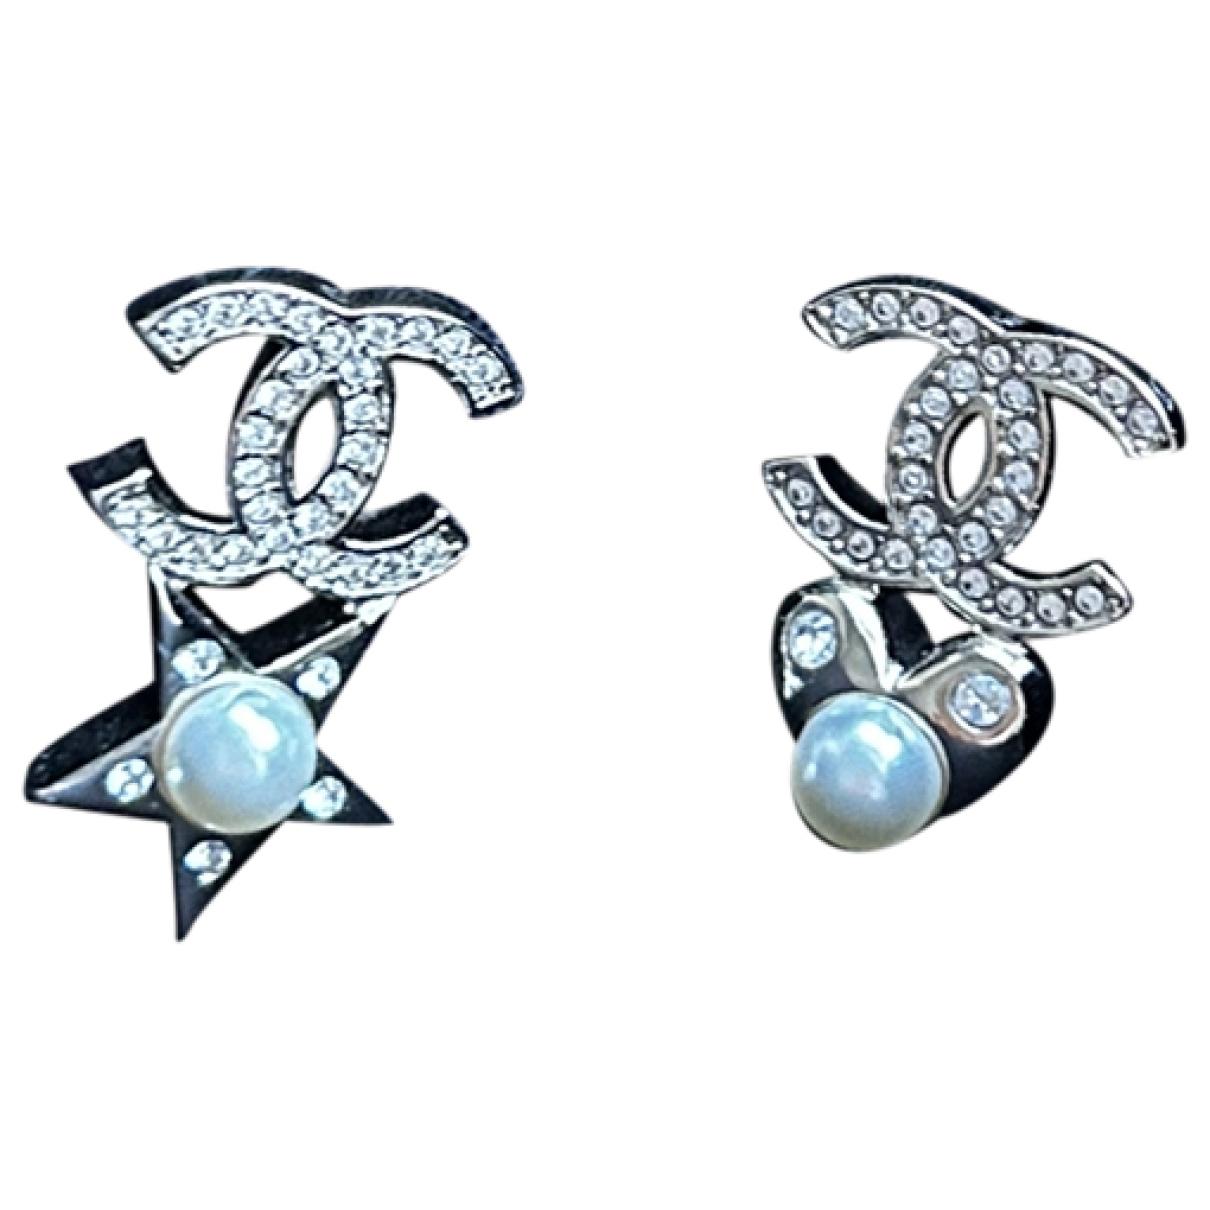 Cc crystal earrings Chanel Silver in Crystal - 35551771